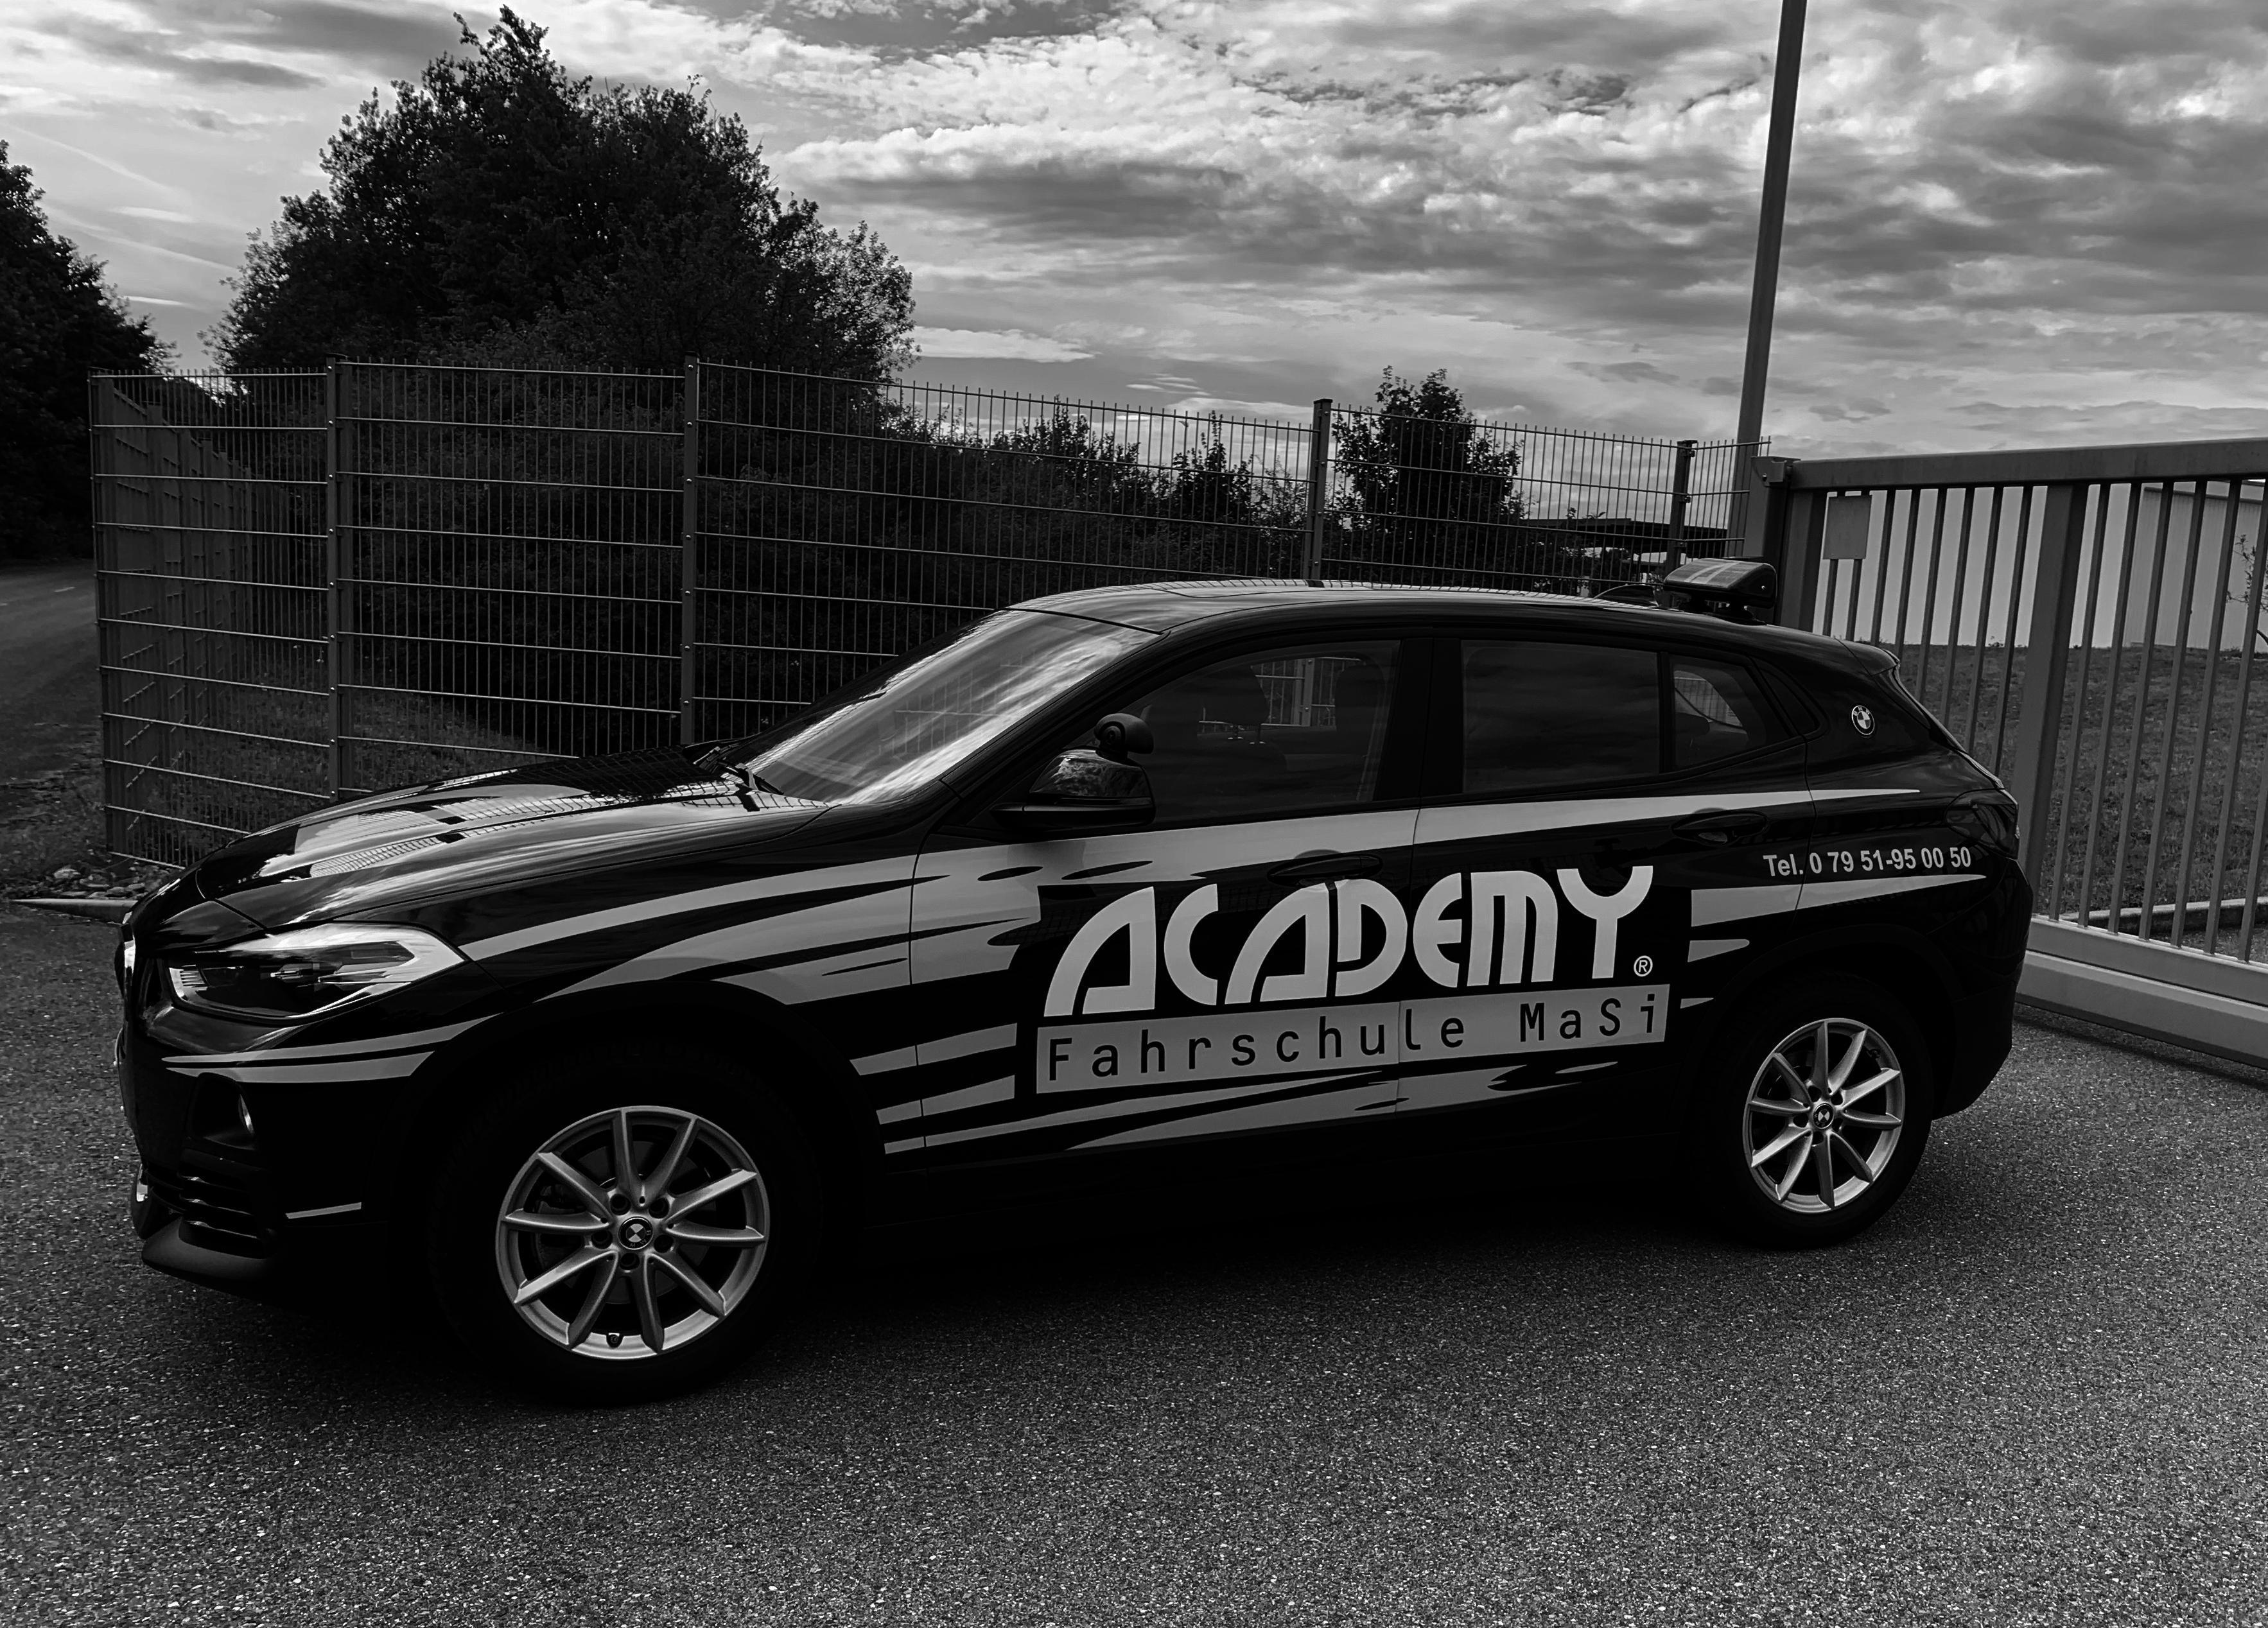 ACADEMY Fahrschule BMW X2